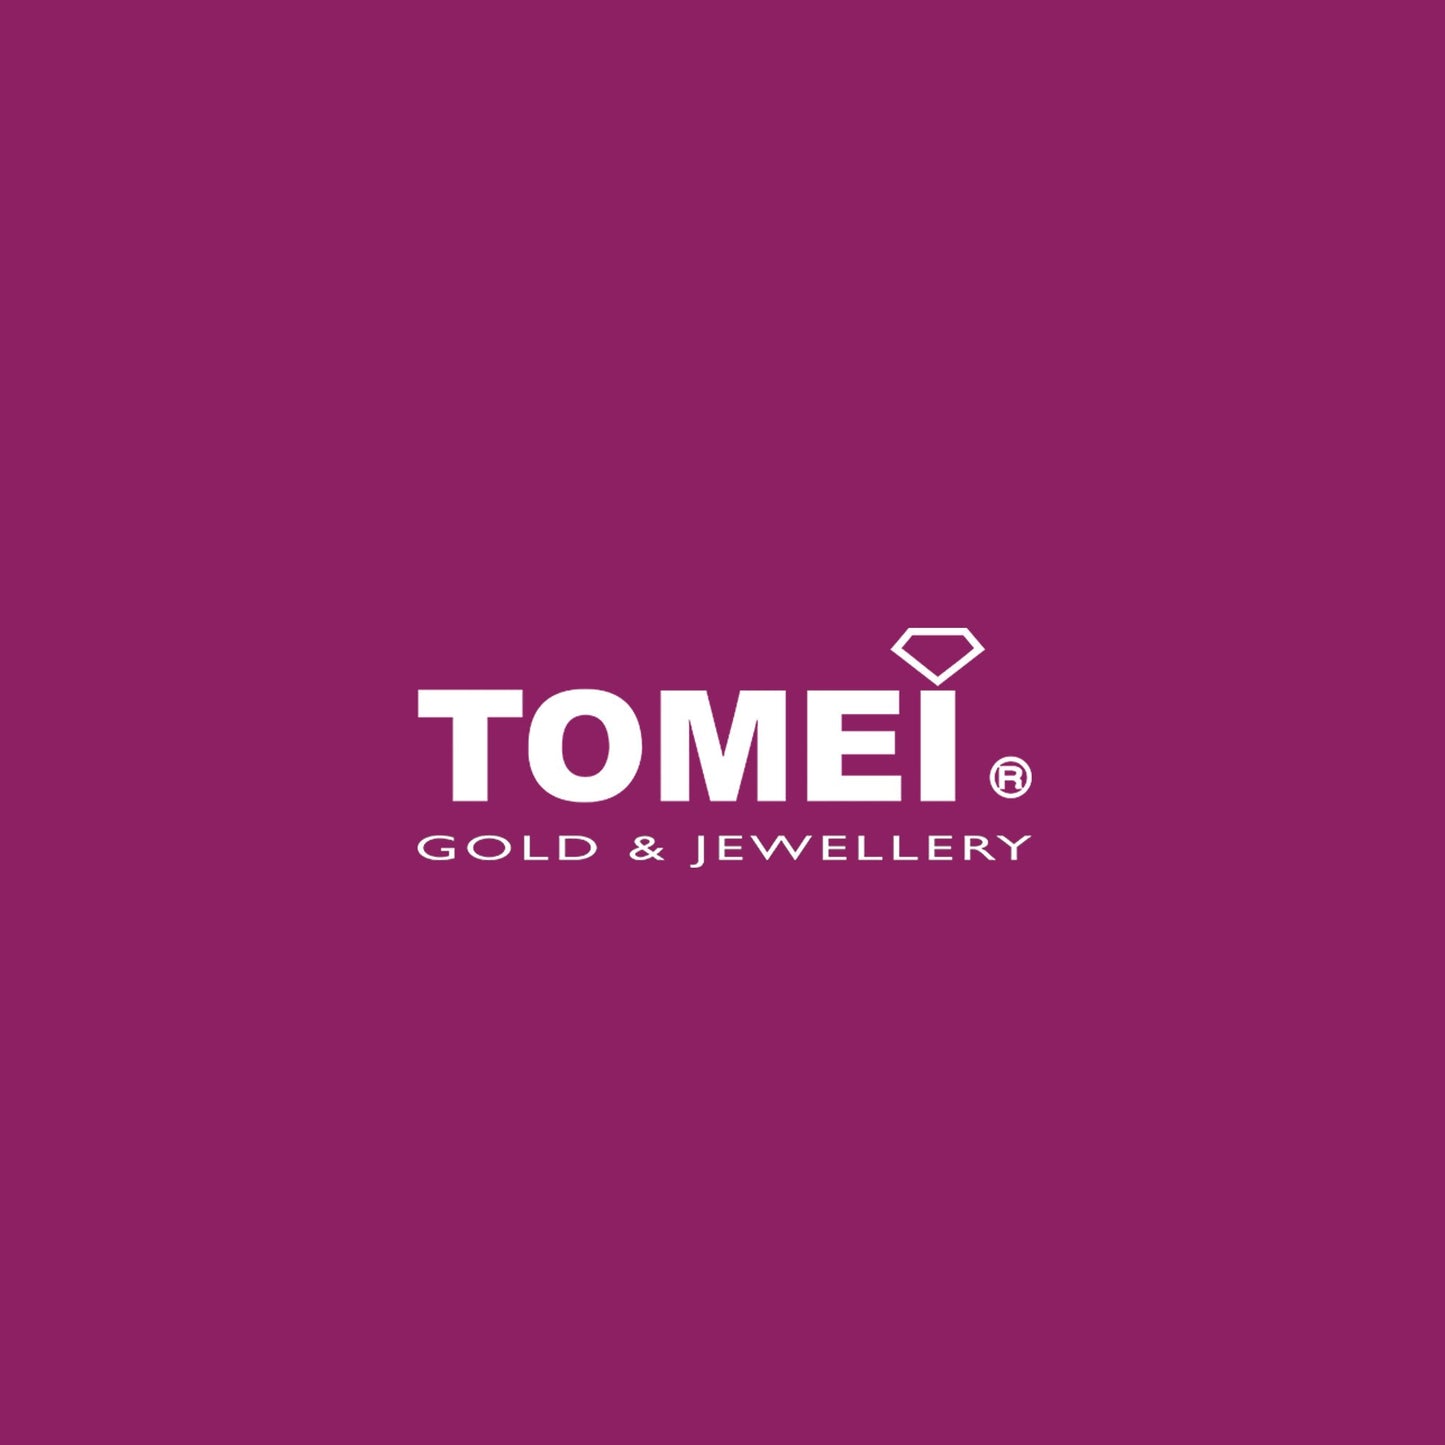 TOMEI Love Lock Bracelet, White+Rose Gold 585